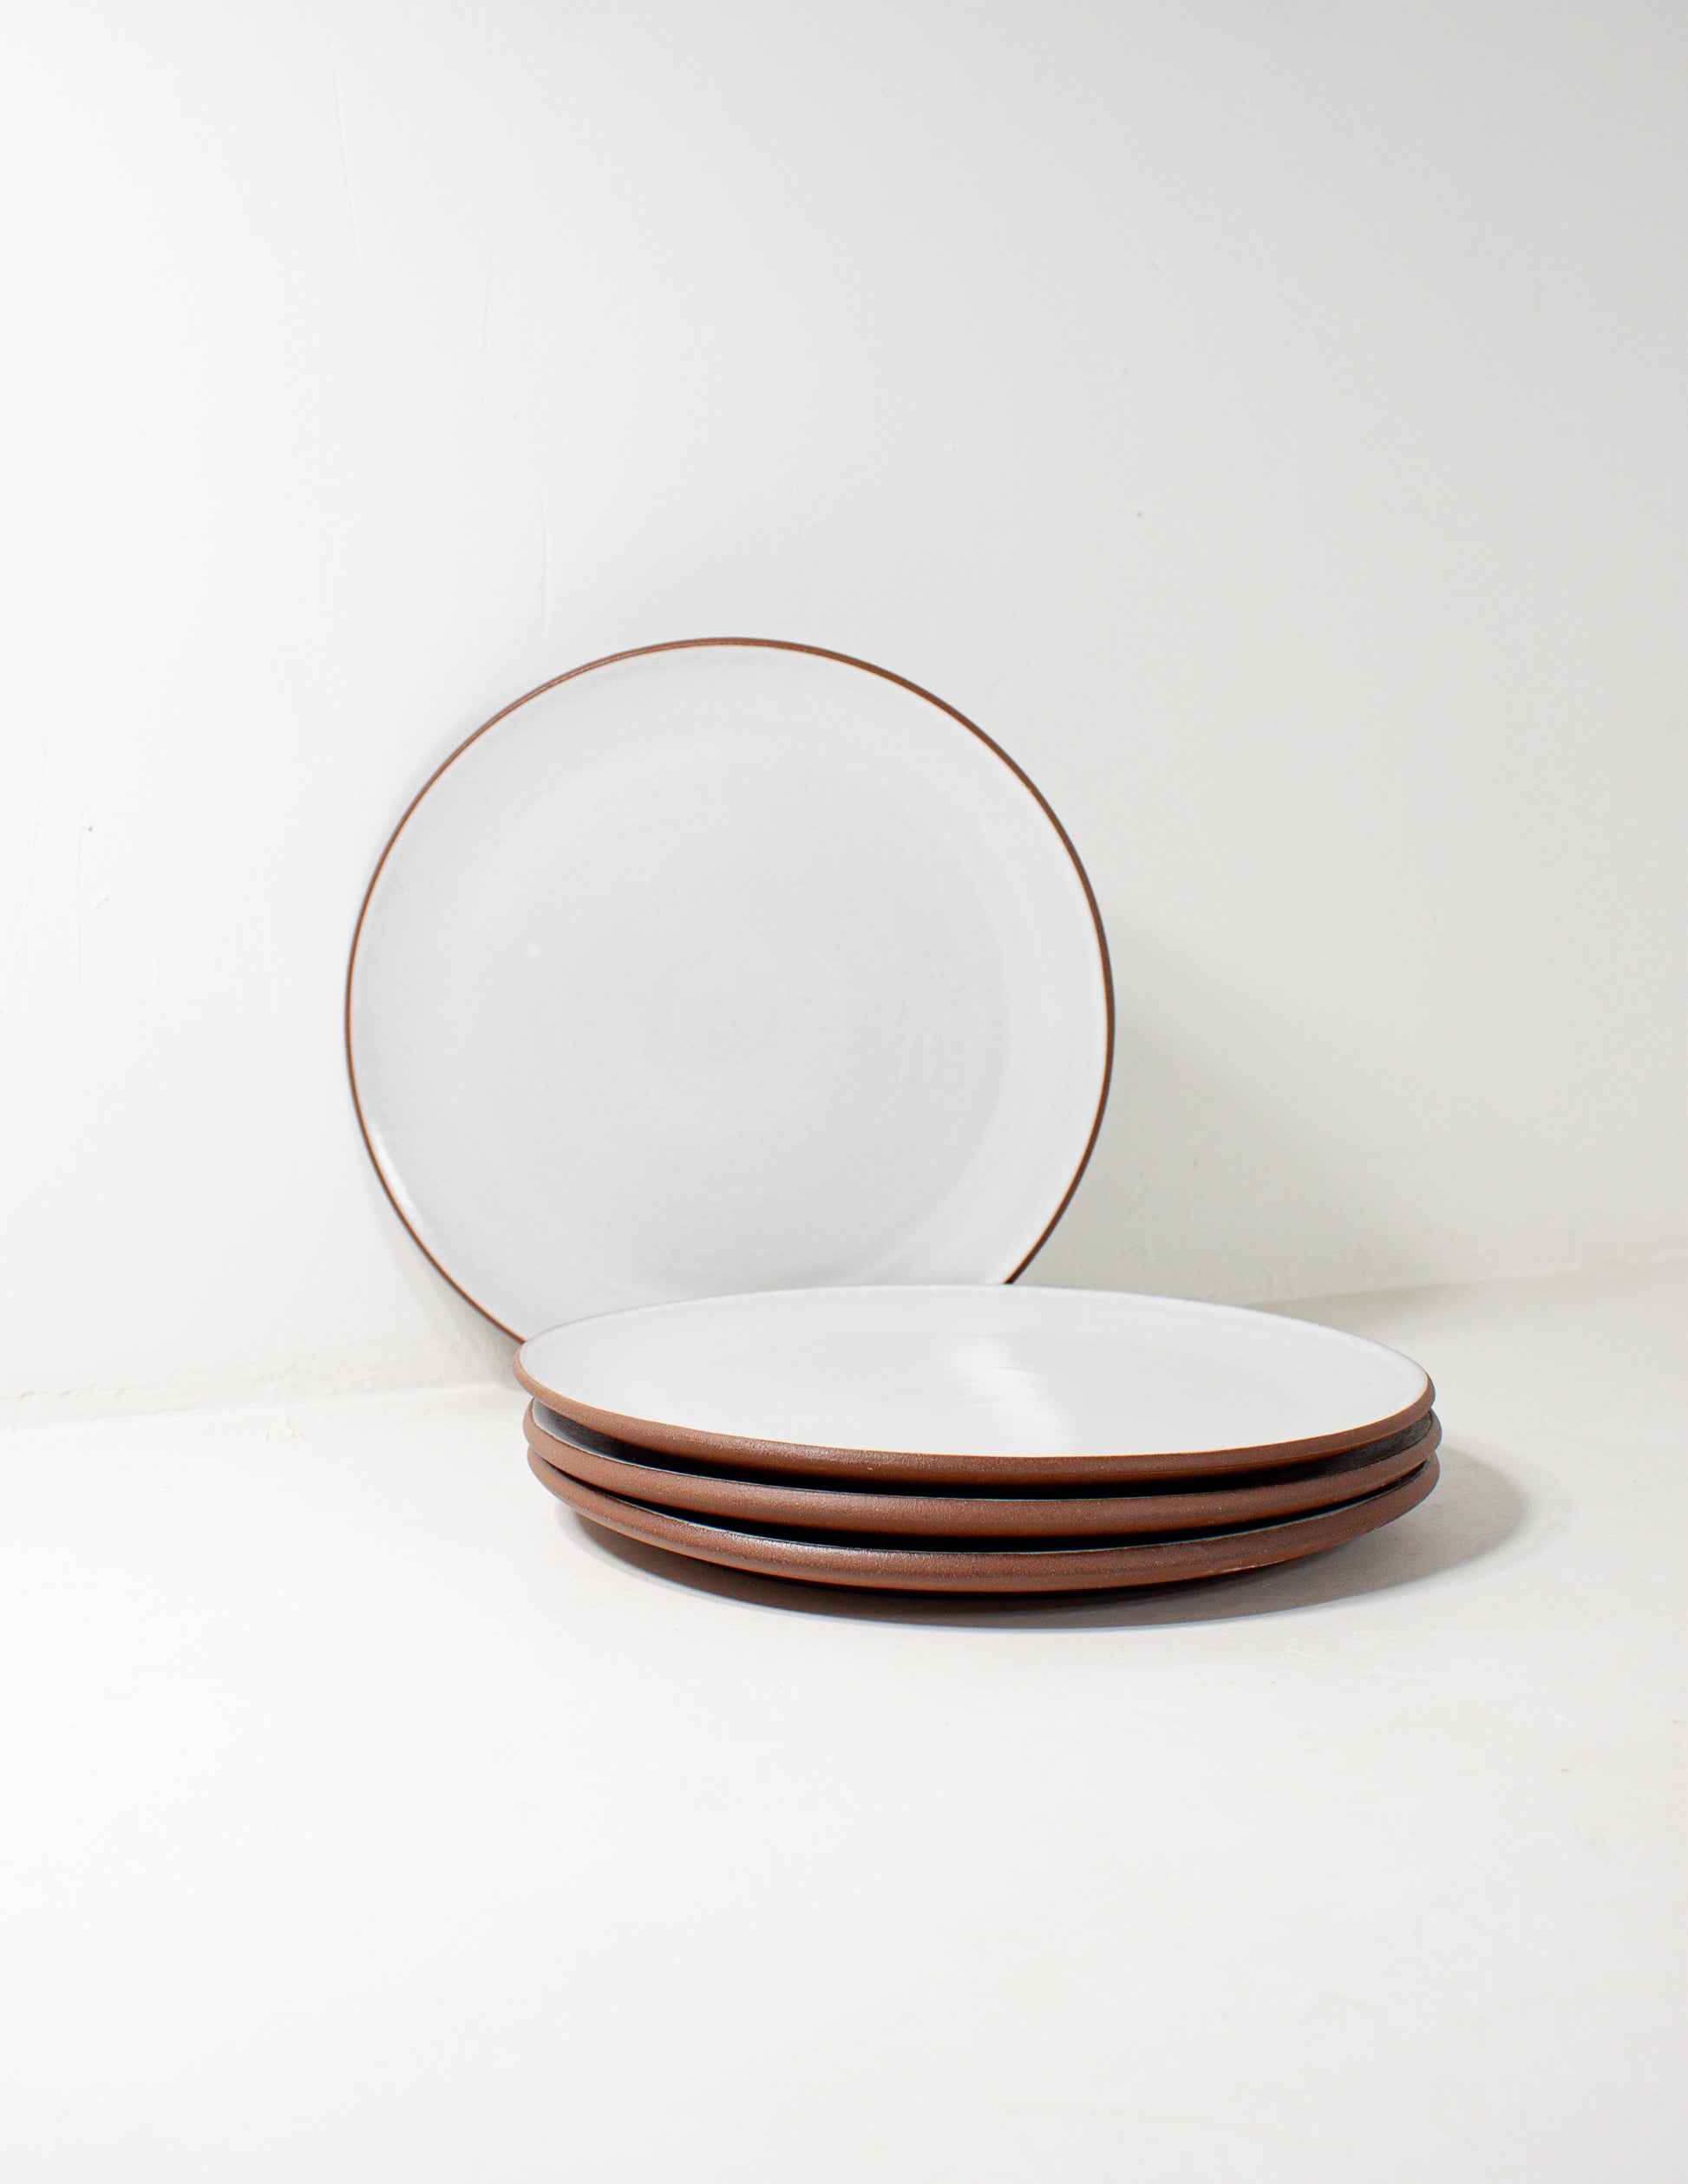 modern plates handmade and glazed in white